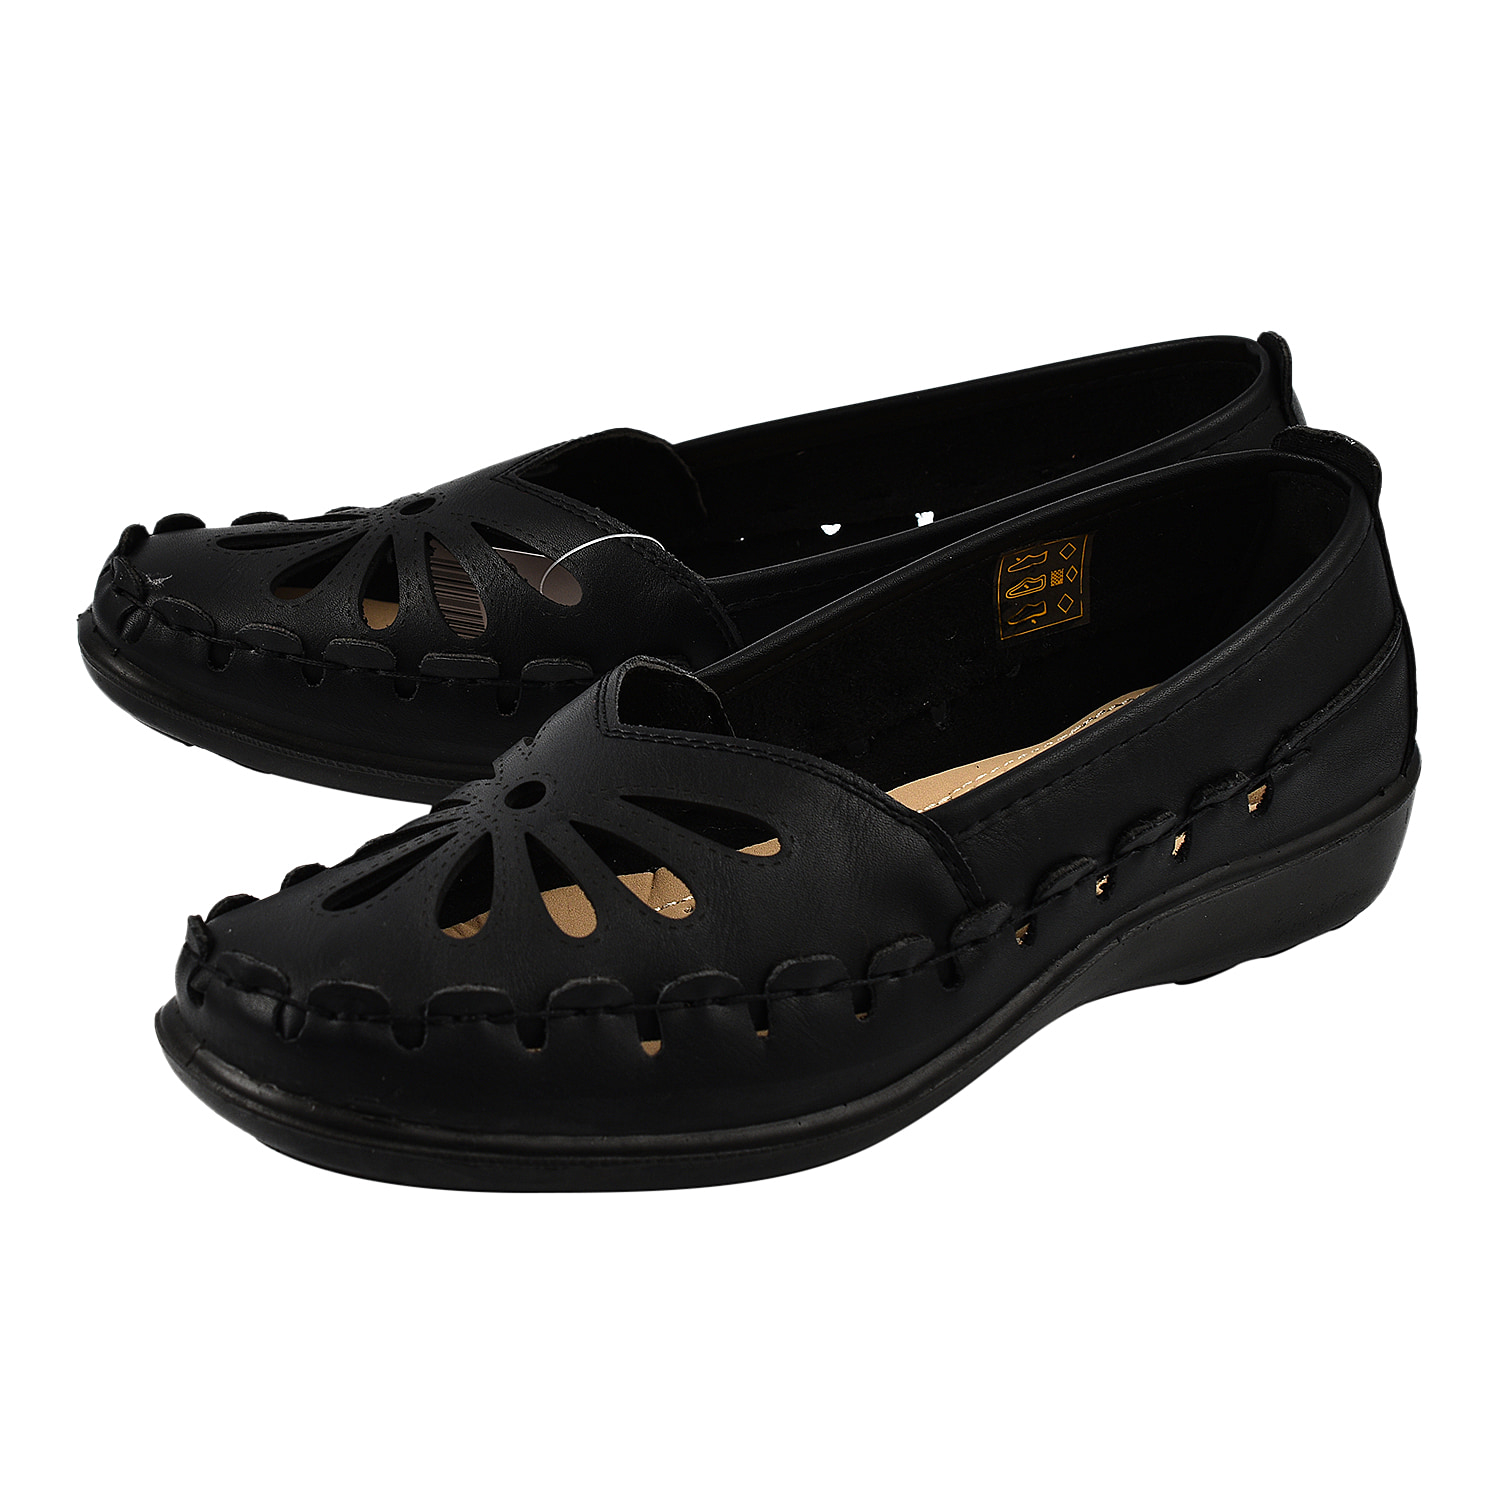 Shoe Tree Comfort Cut Out Summer Shoe (Size 3) - Black